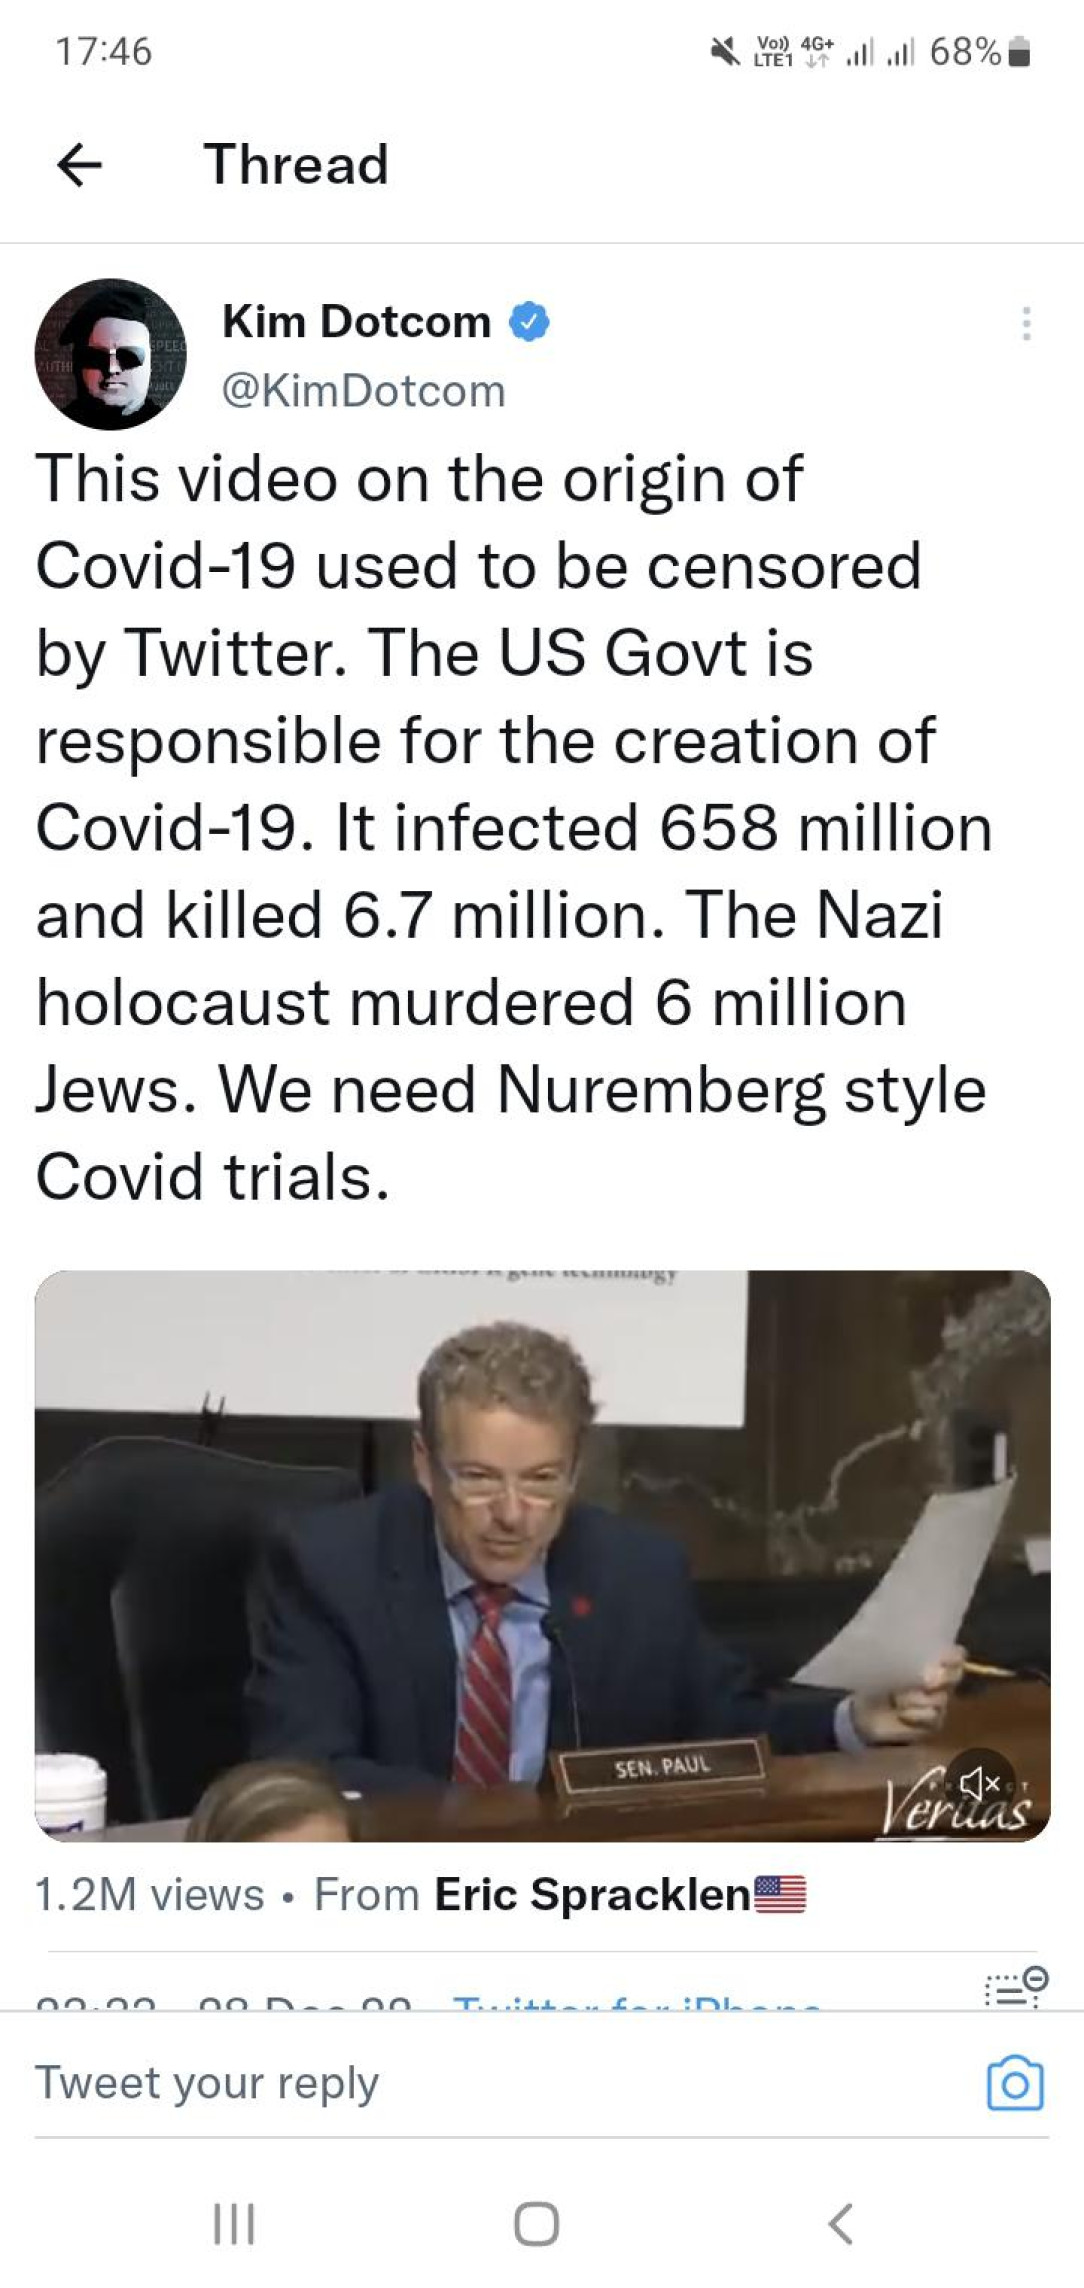 Kimdotcom thinks the US gov. Created Covid-19 ‍️